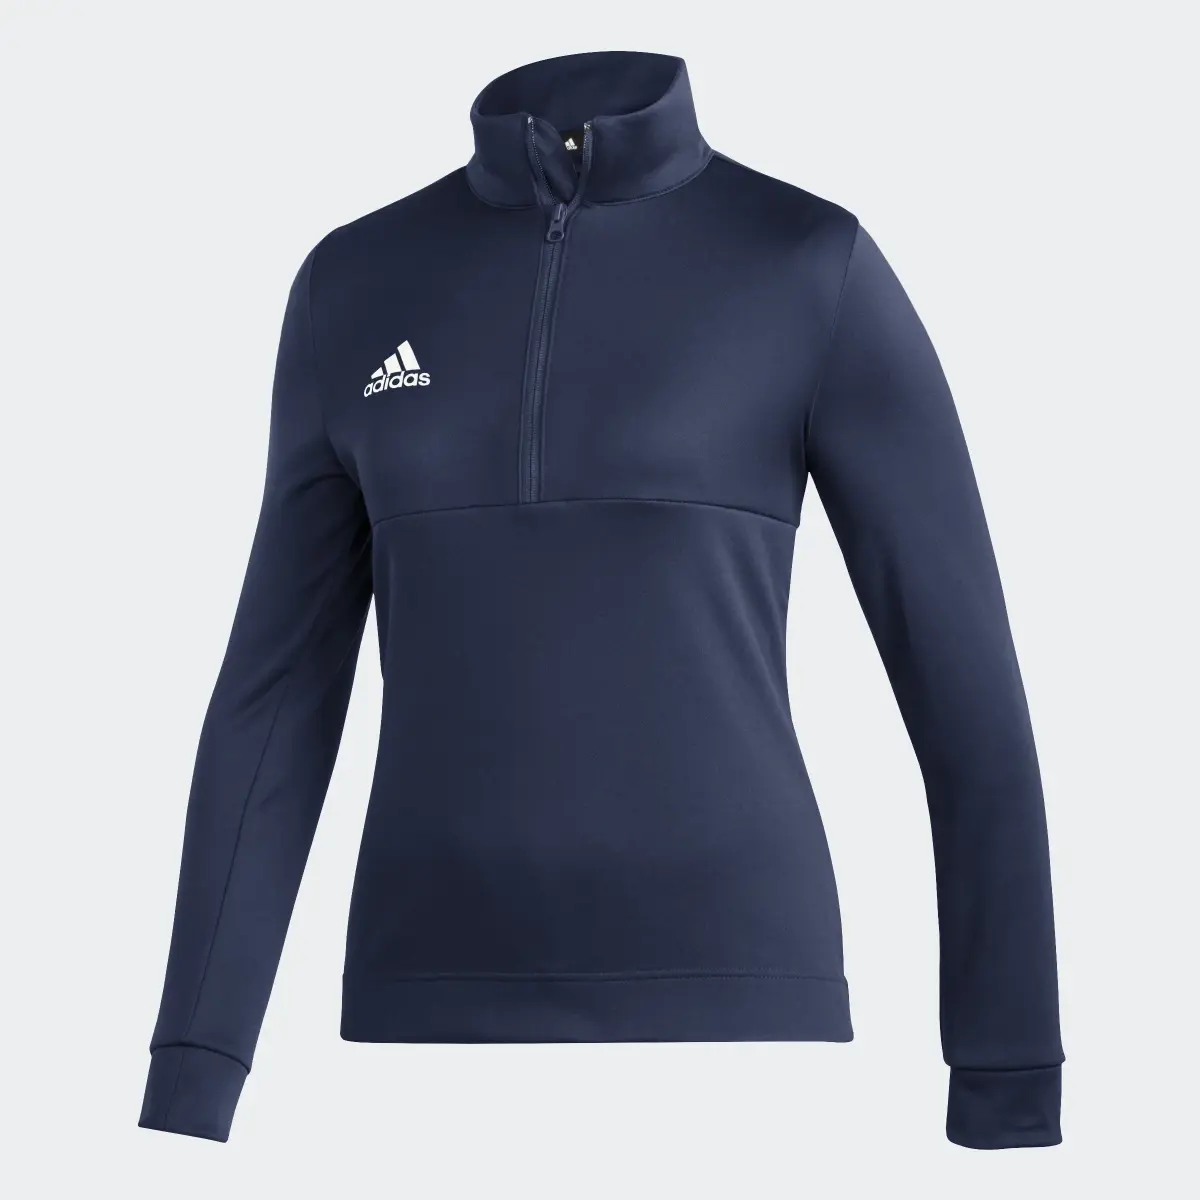 Adidas Team Issue Quarter Zip Sweatshirt. 1